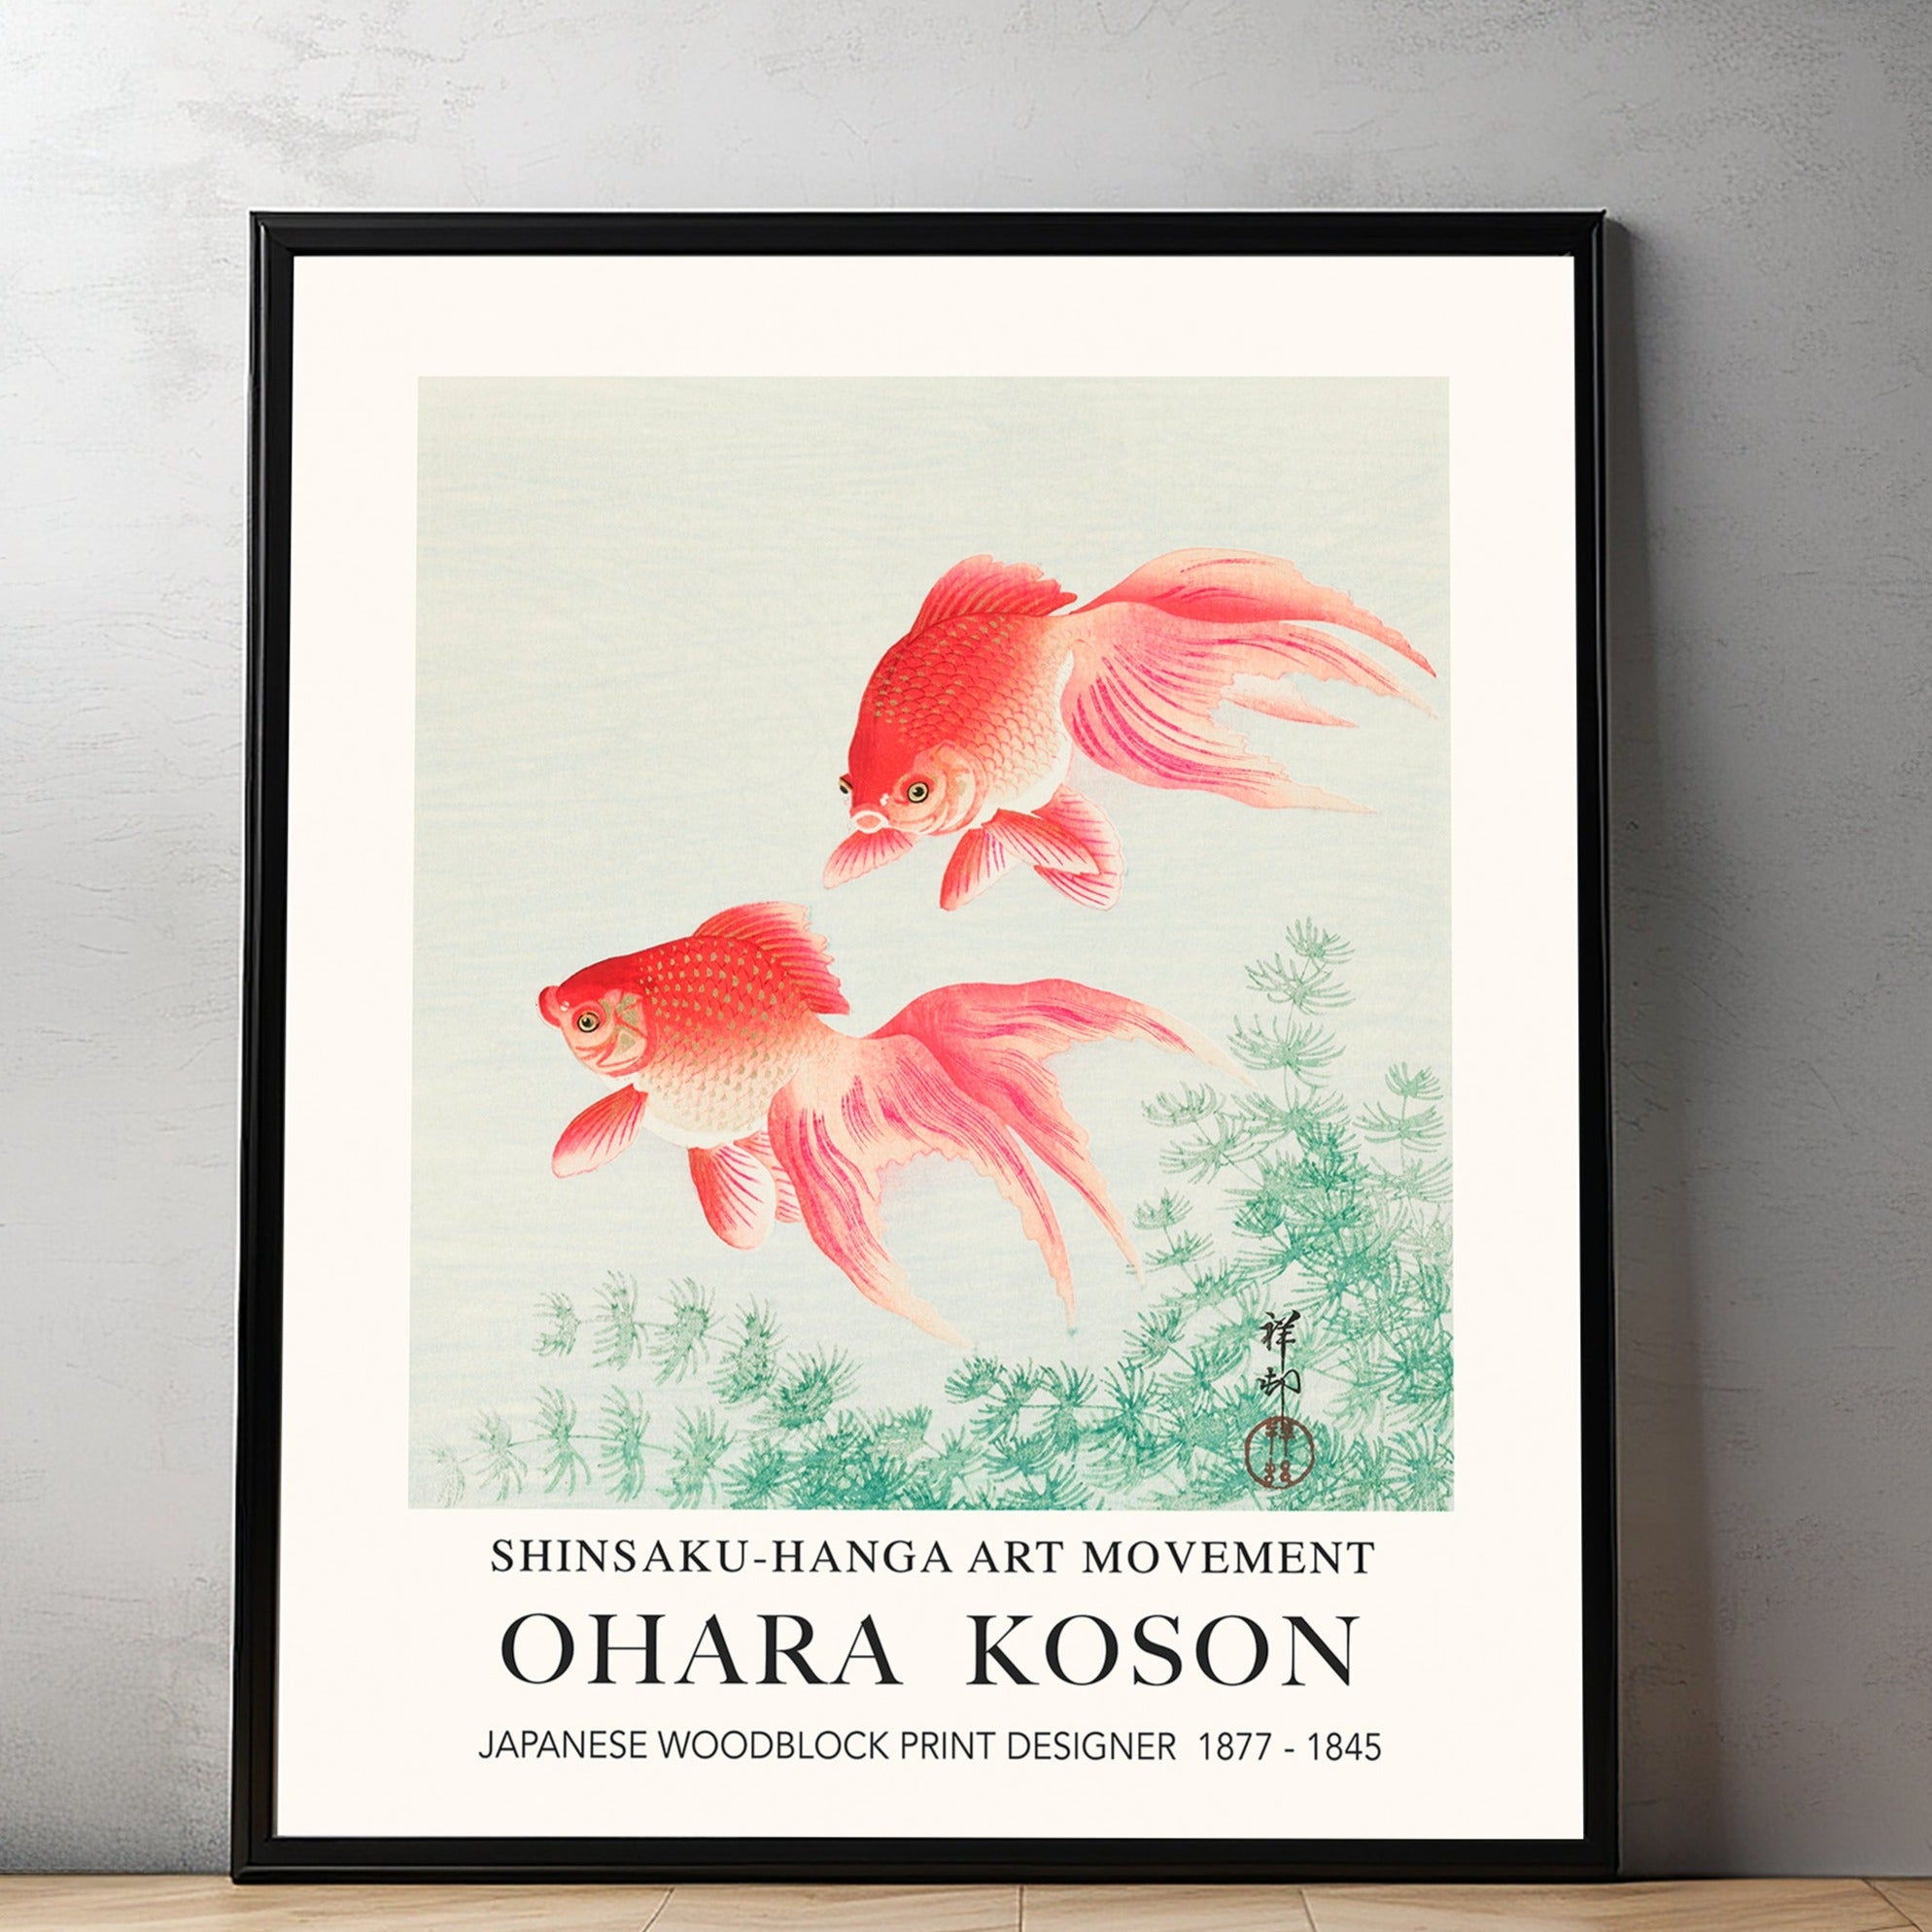 Ohara Kason Exhibition Print - Goldfish